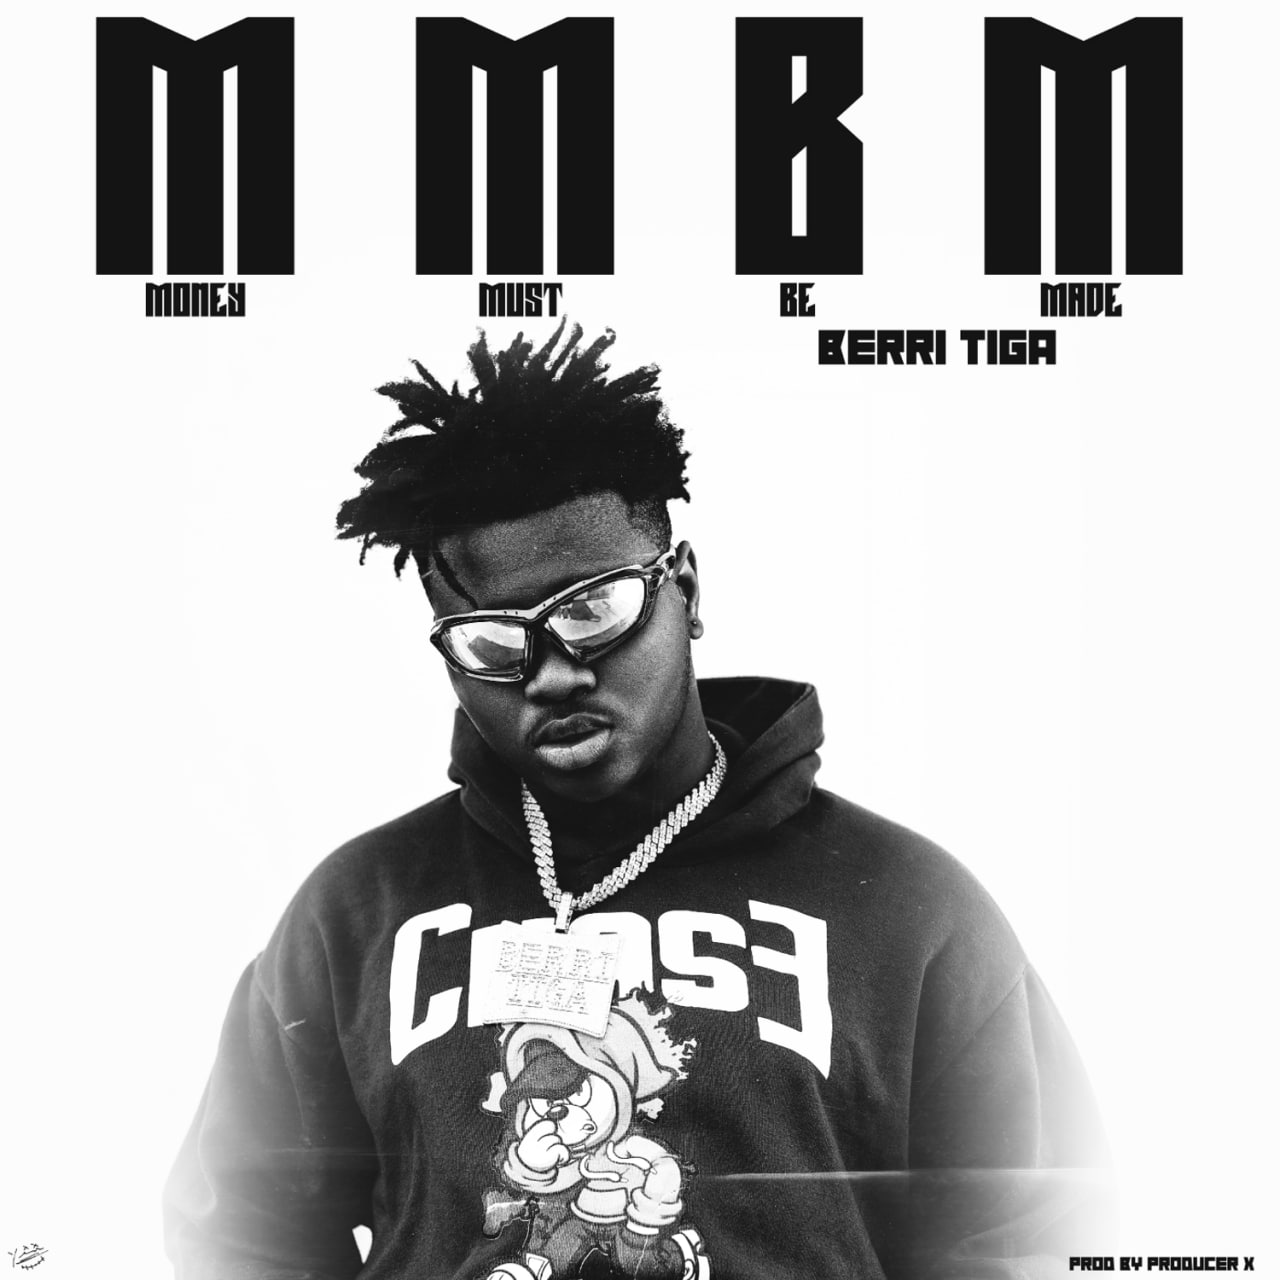 MMBM (Money Must Be Made) - Berri Tiga